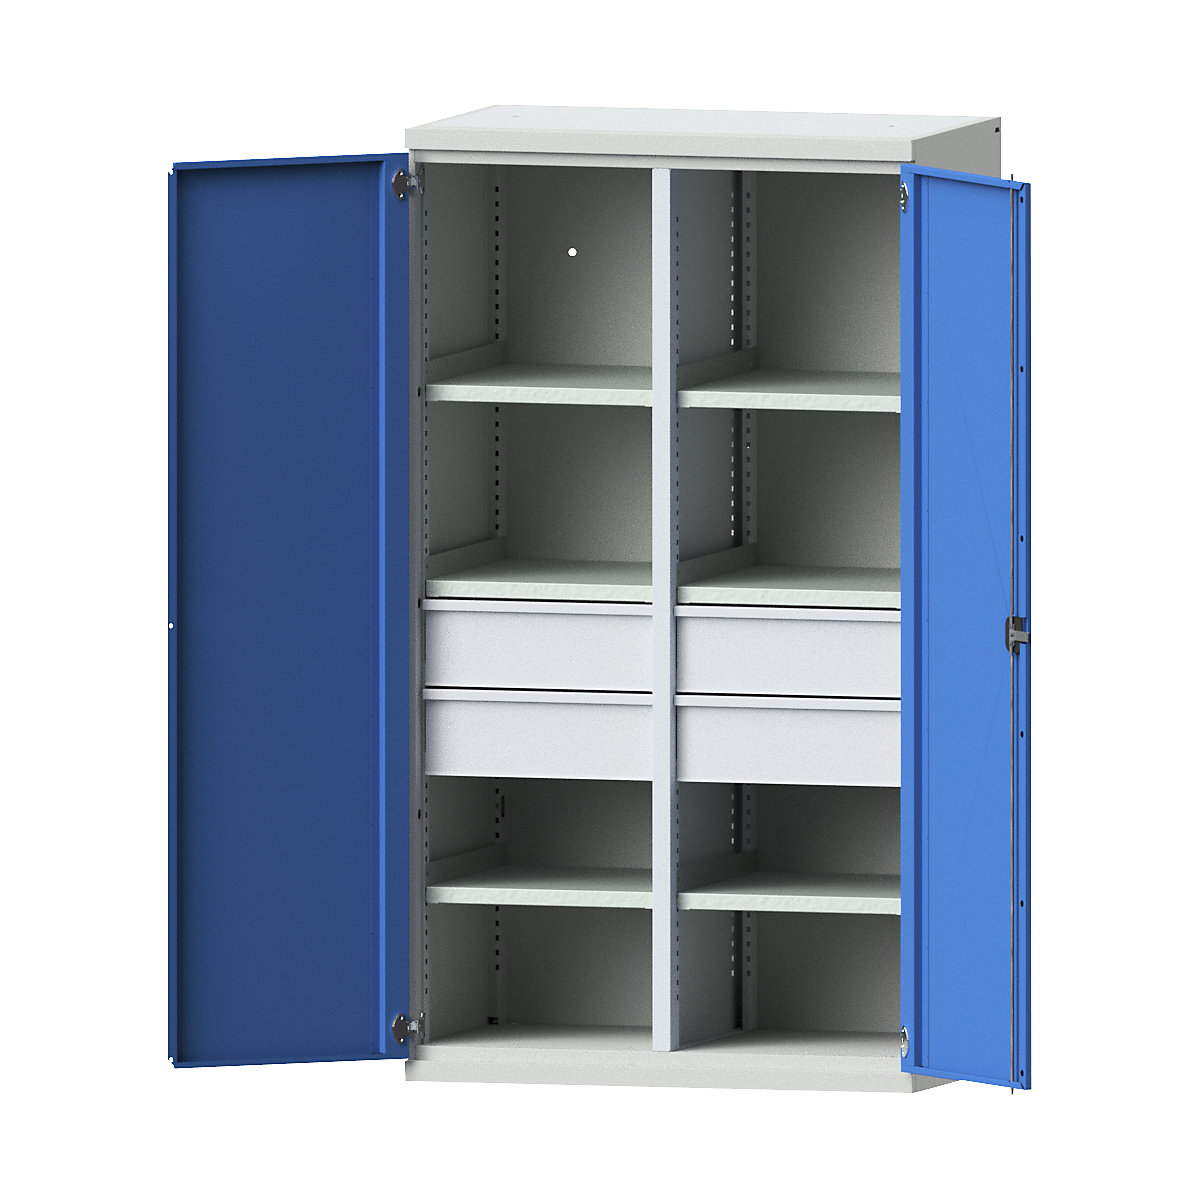 Heavy duty cupboard made of steel – eurokraft pro, 6 shelves, 4 x 180 mm high drawers, light grey / light blue-10